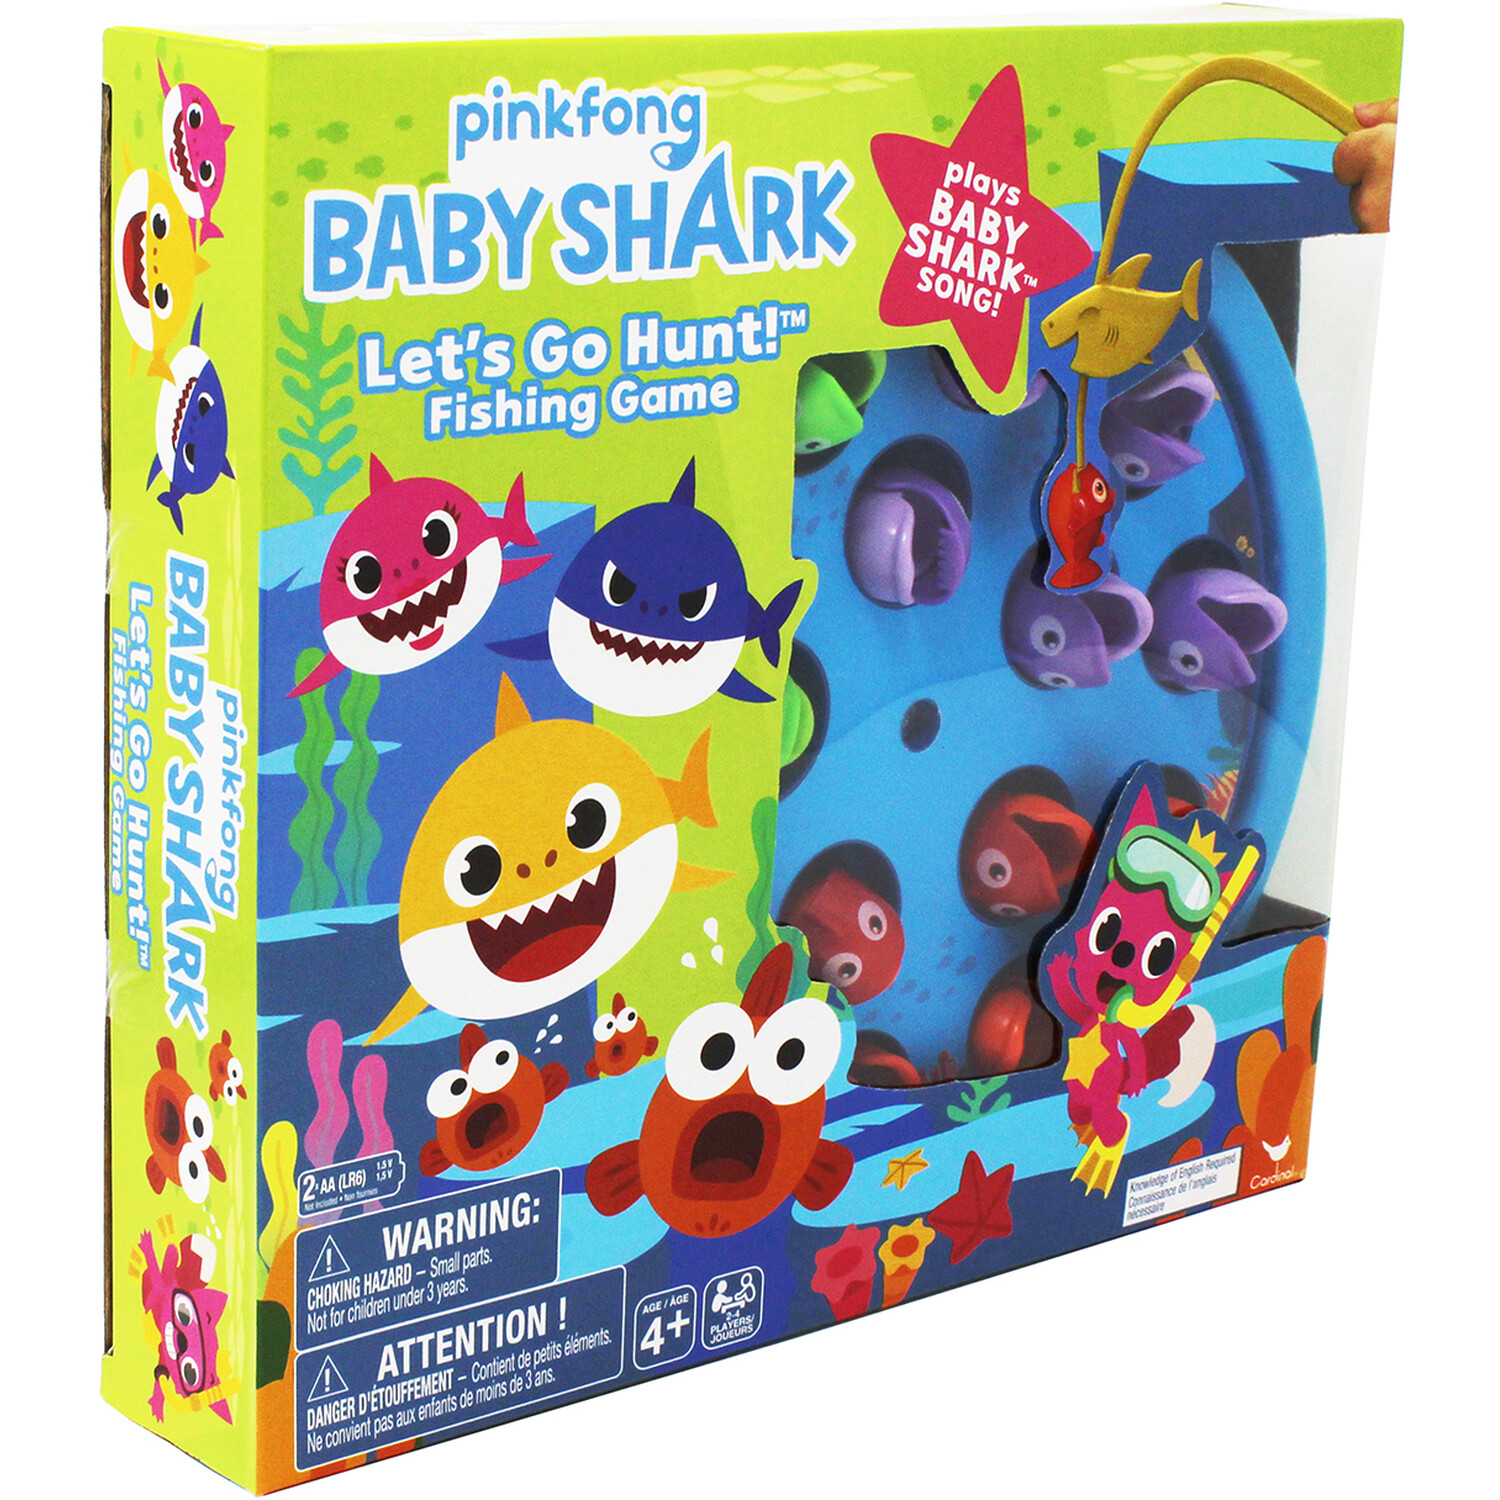 Pinkfong Baby Shark Fishing Game Image